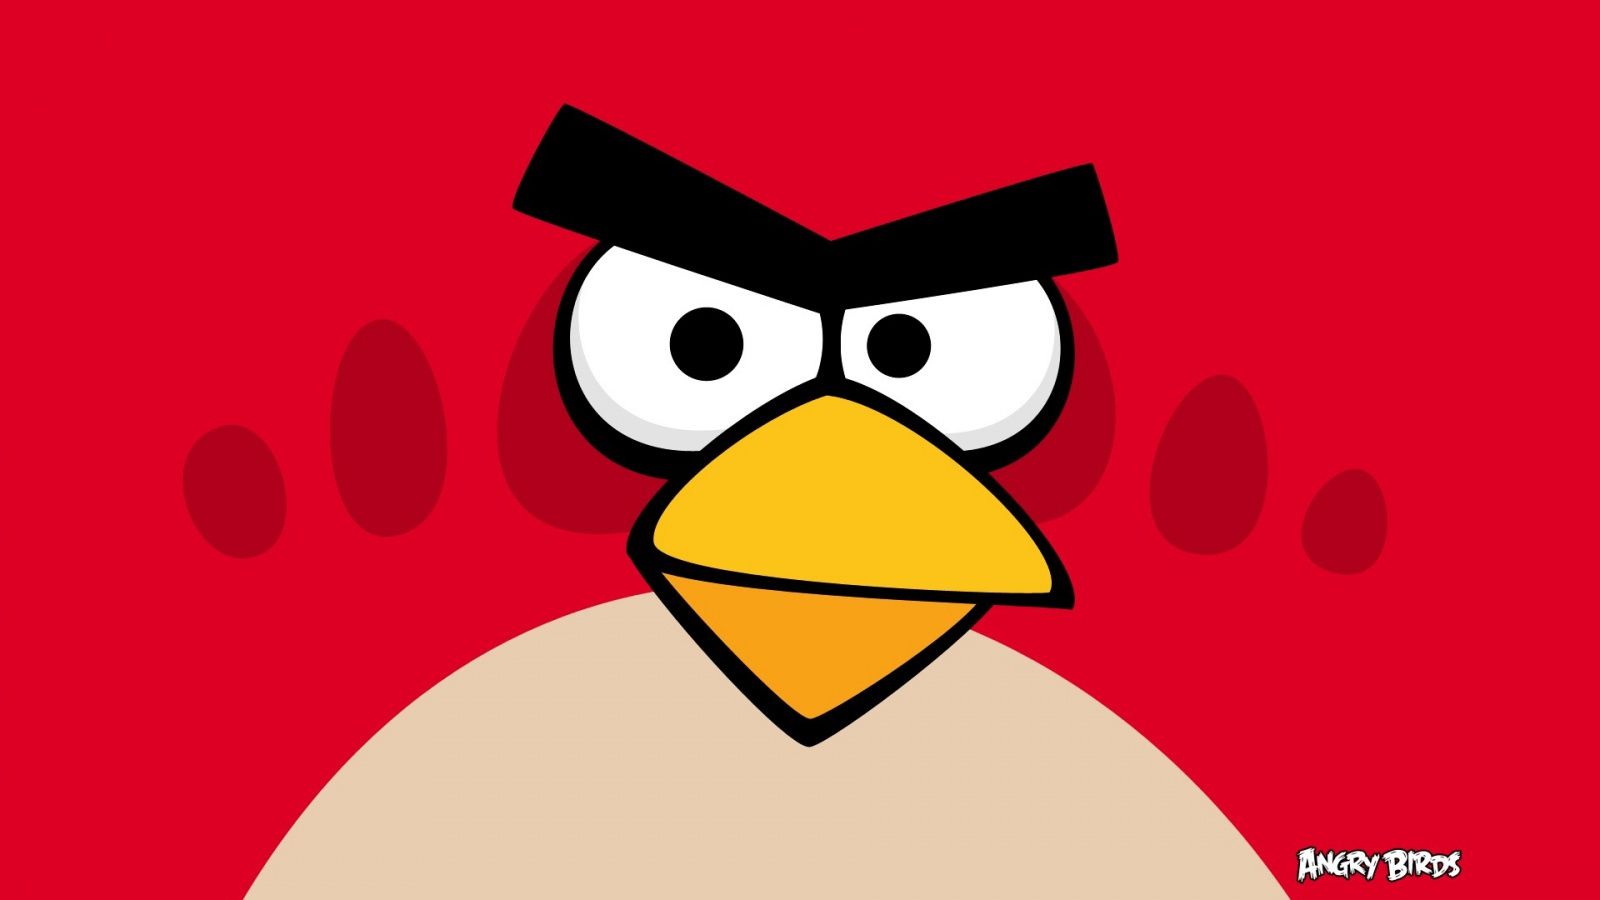 Angry Birds Big Red Bird Wallpaper, Size: 1600x900 | AmazingPict ...